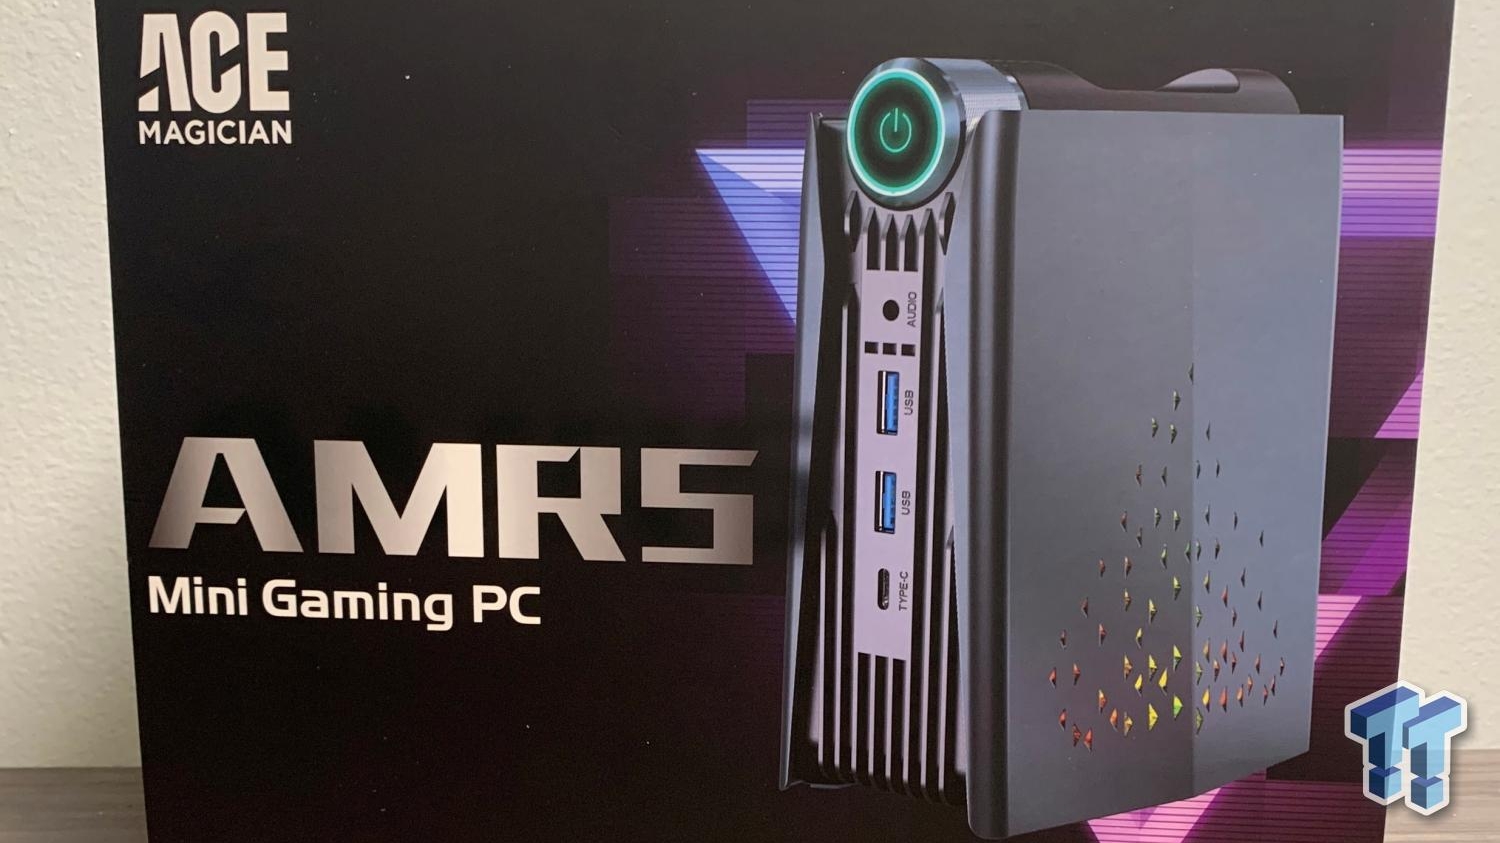 ACEMAGICIAN AMR5 - AVIS Sur Ce Mini PC Gaming